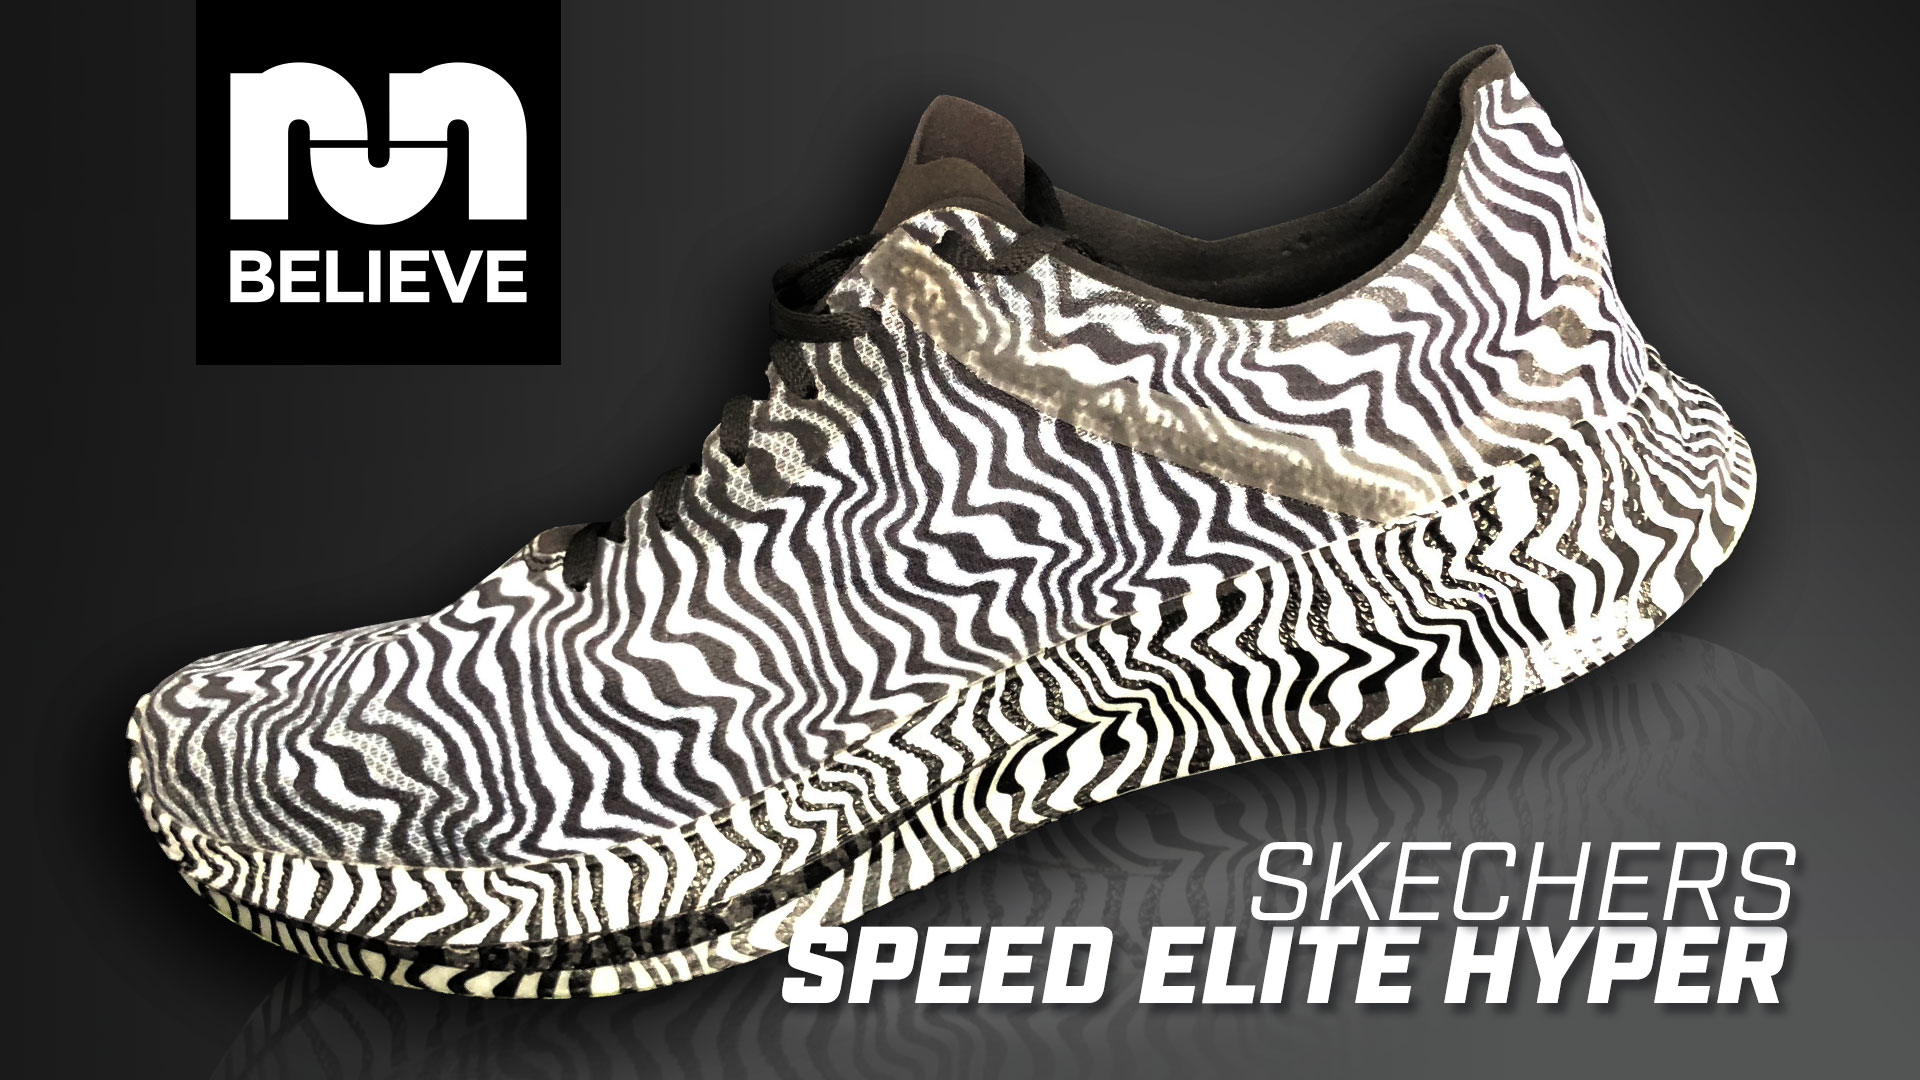 Skechers Speed Elite Hyper Video 